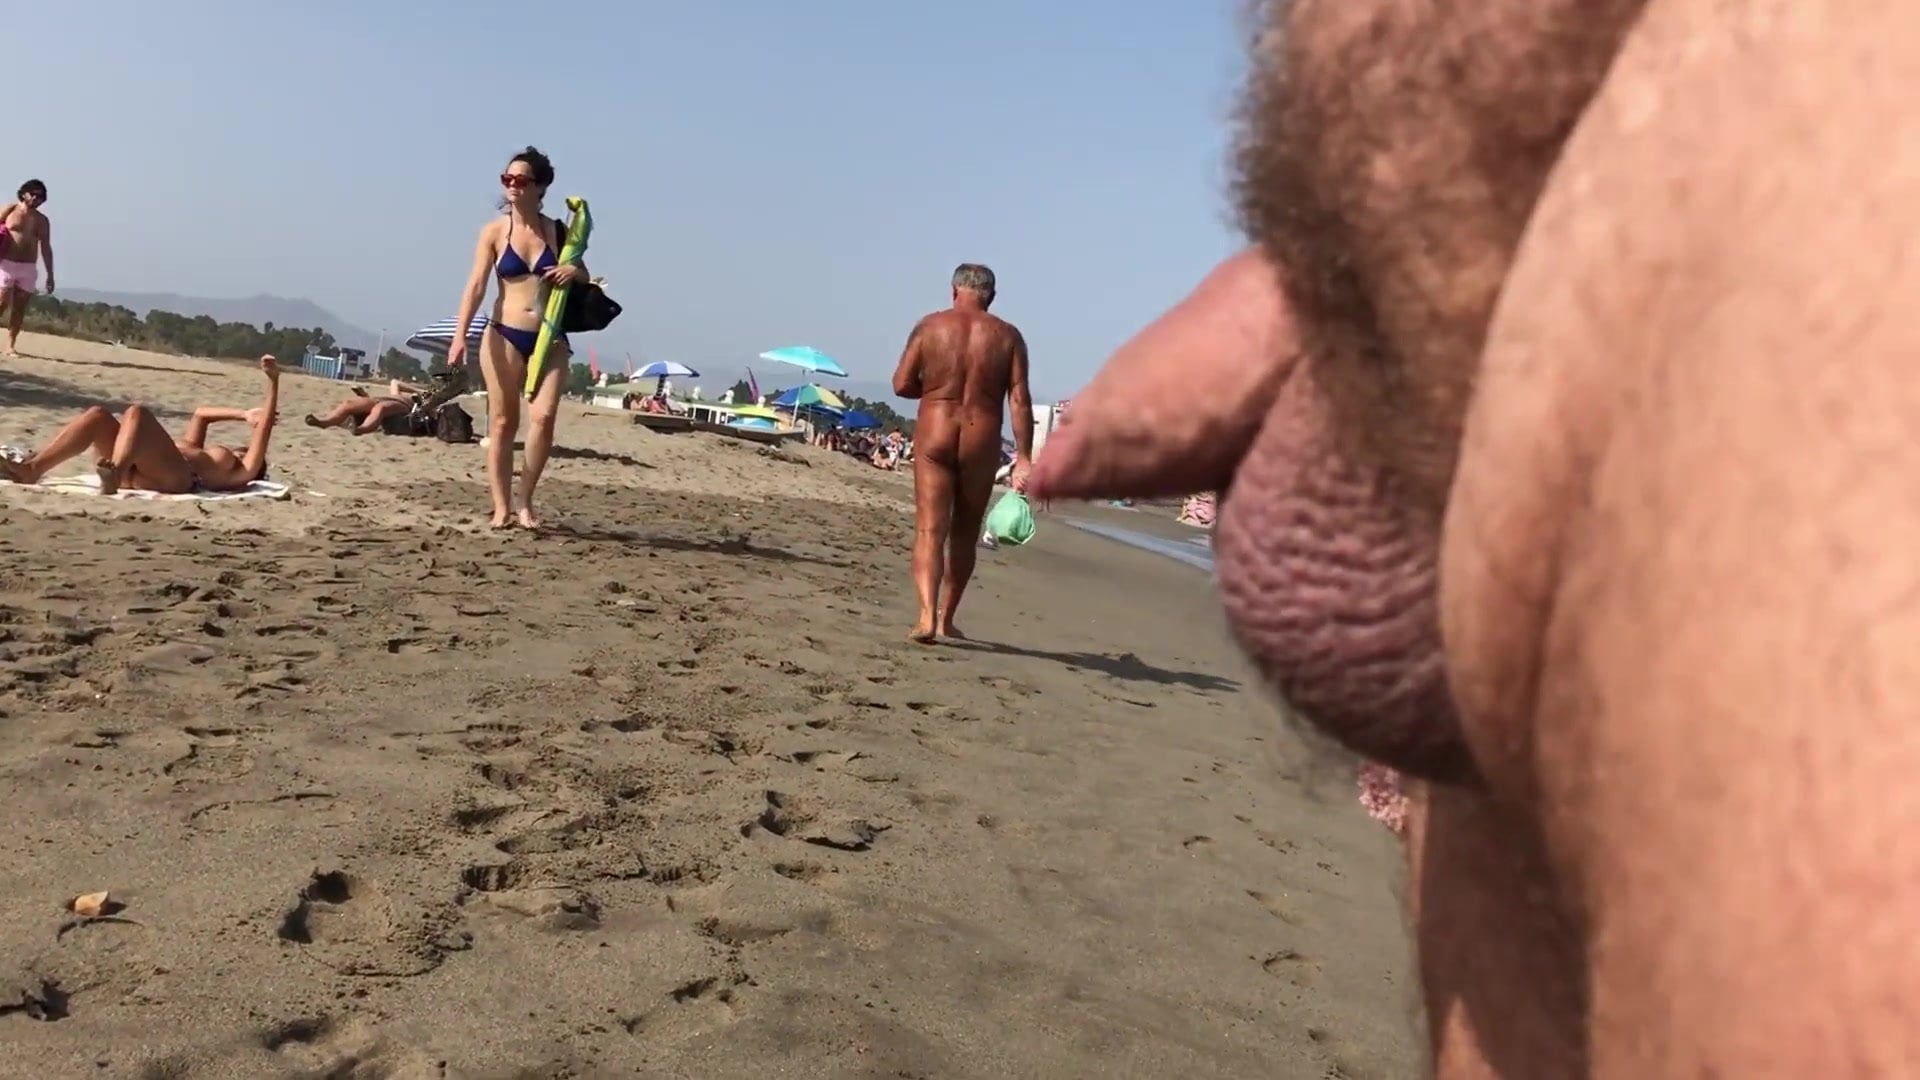 CFNM Small Dick on Nude beach